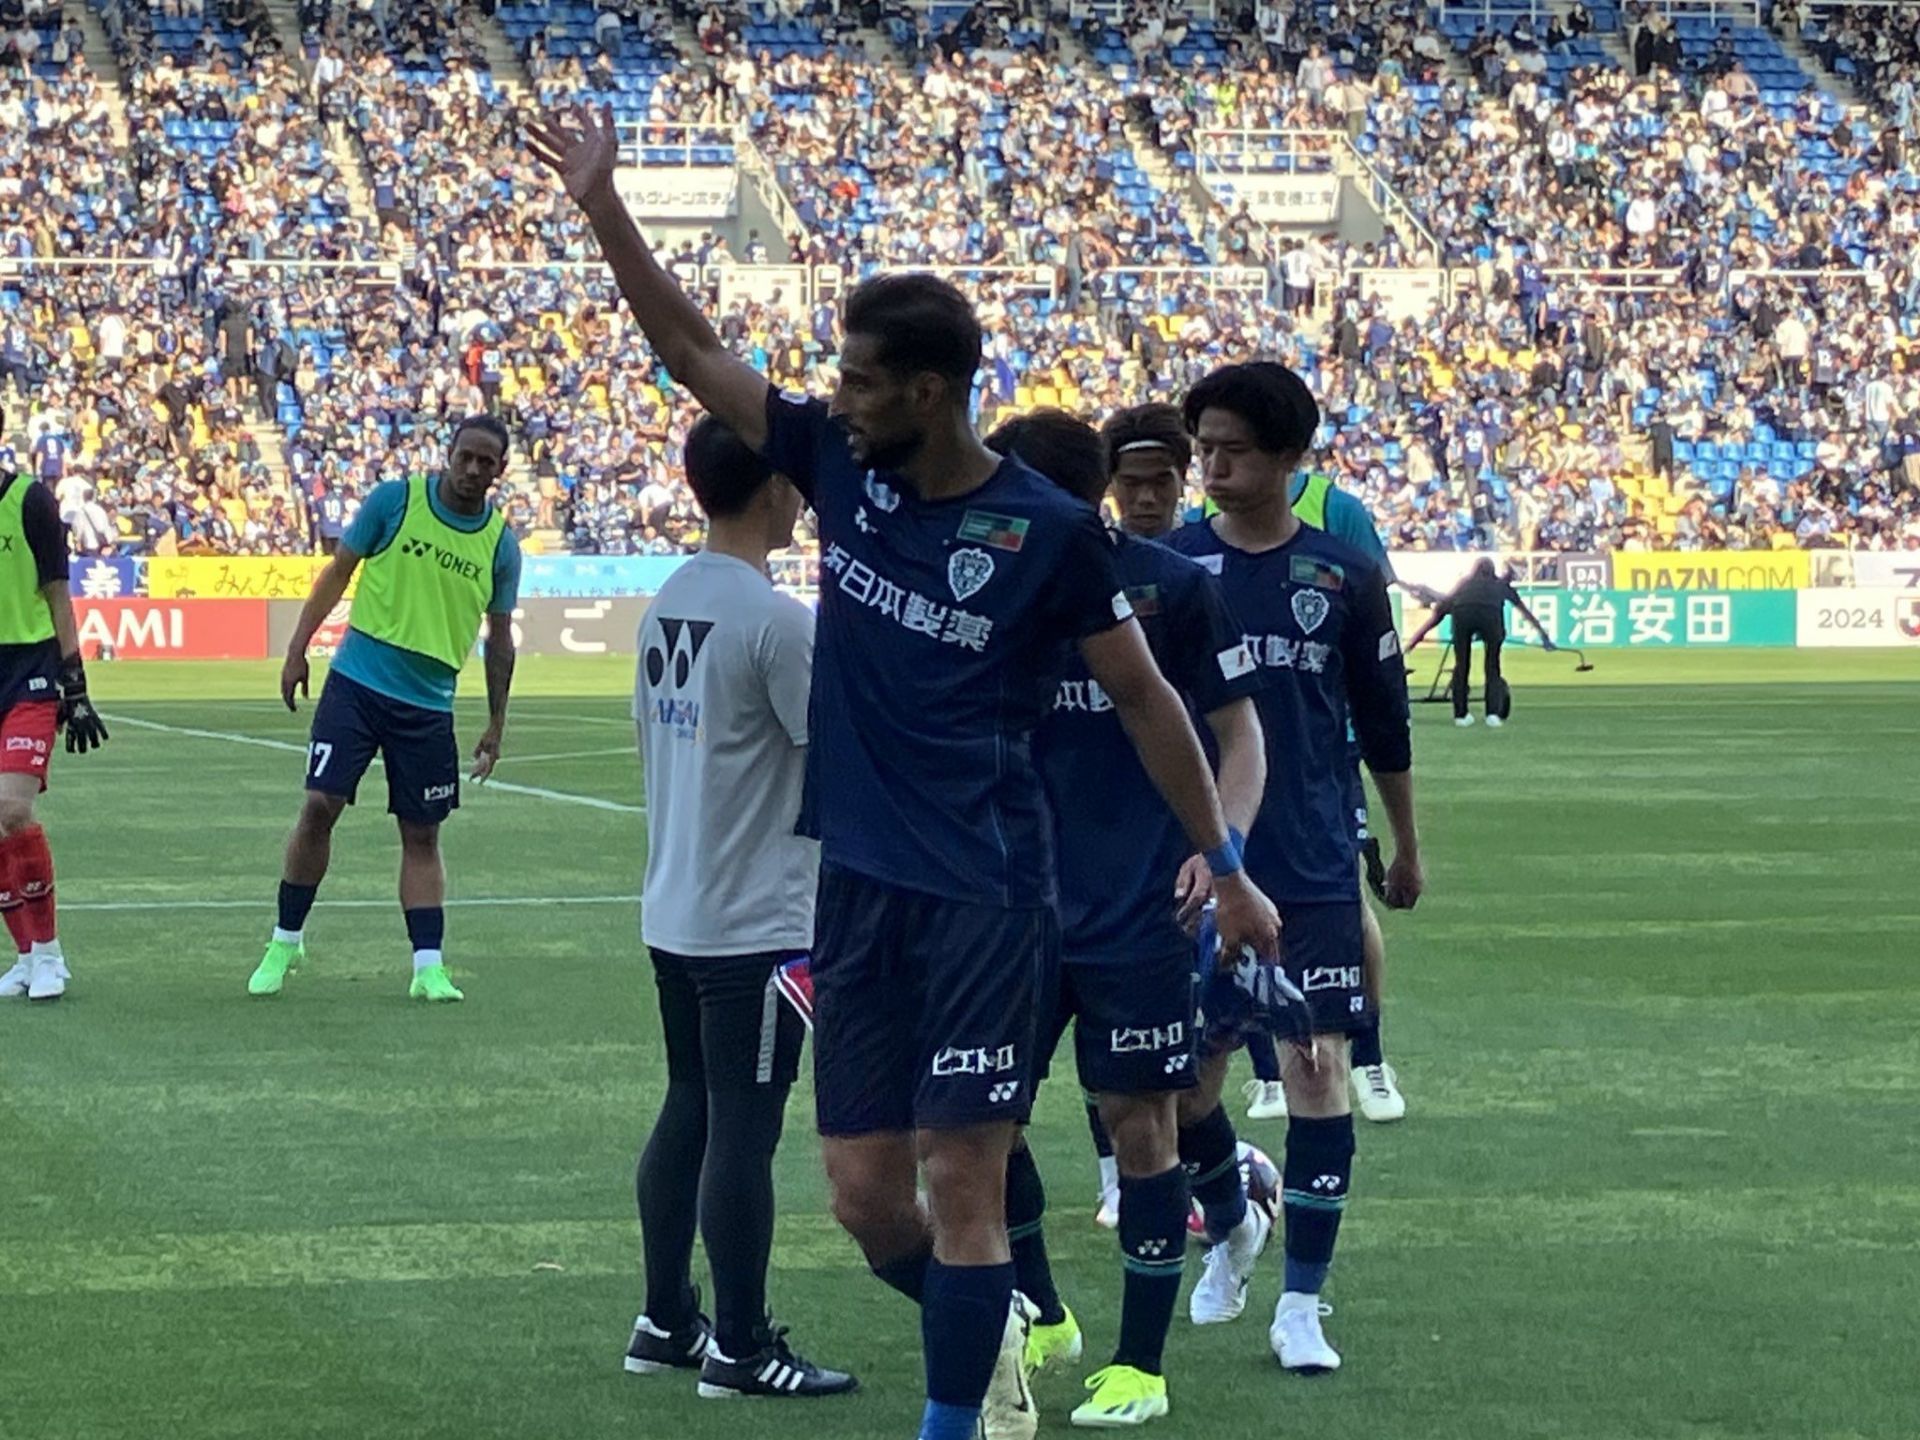 Avispa Fukuoka face Vissel Kobe on Wednesday 